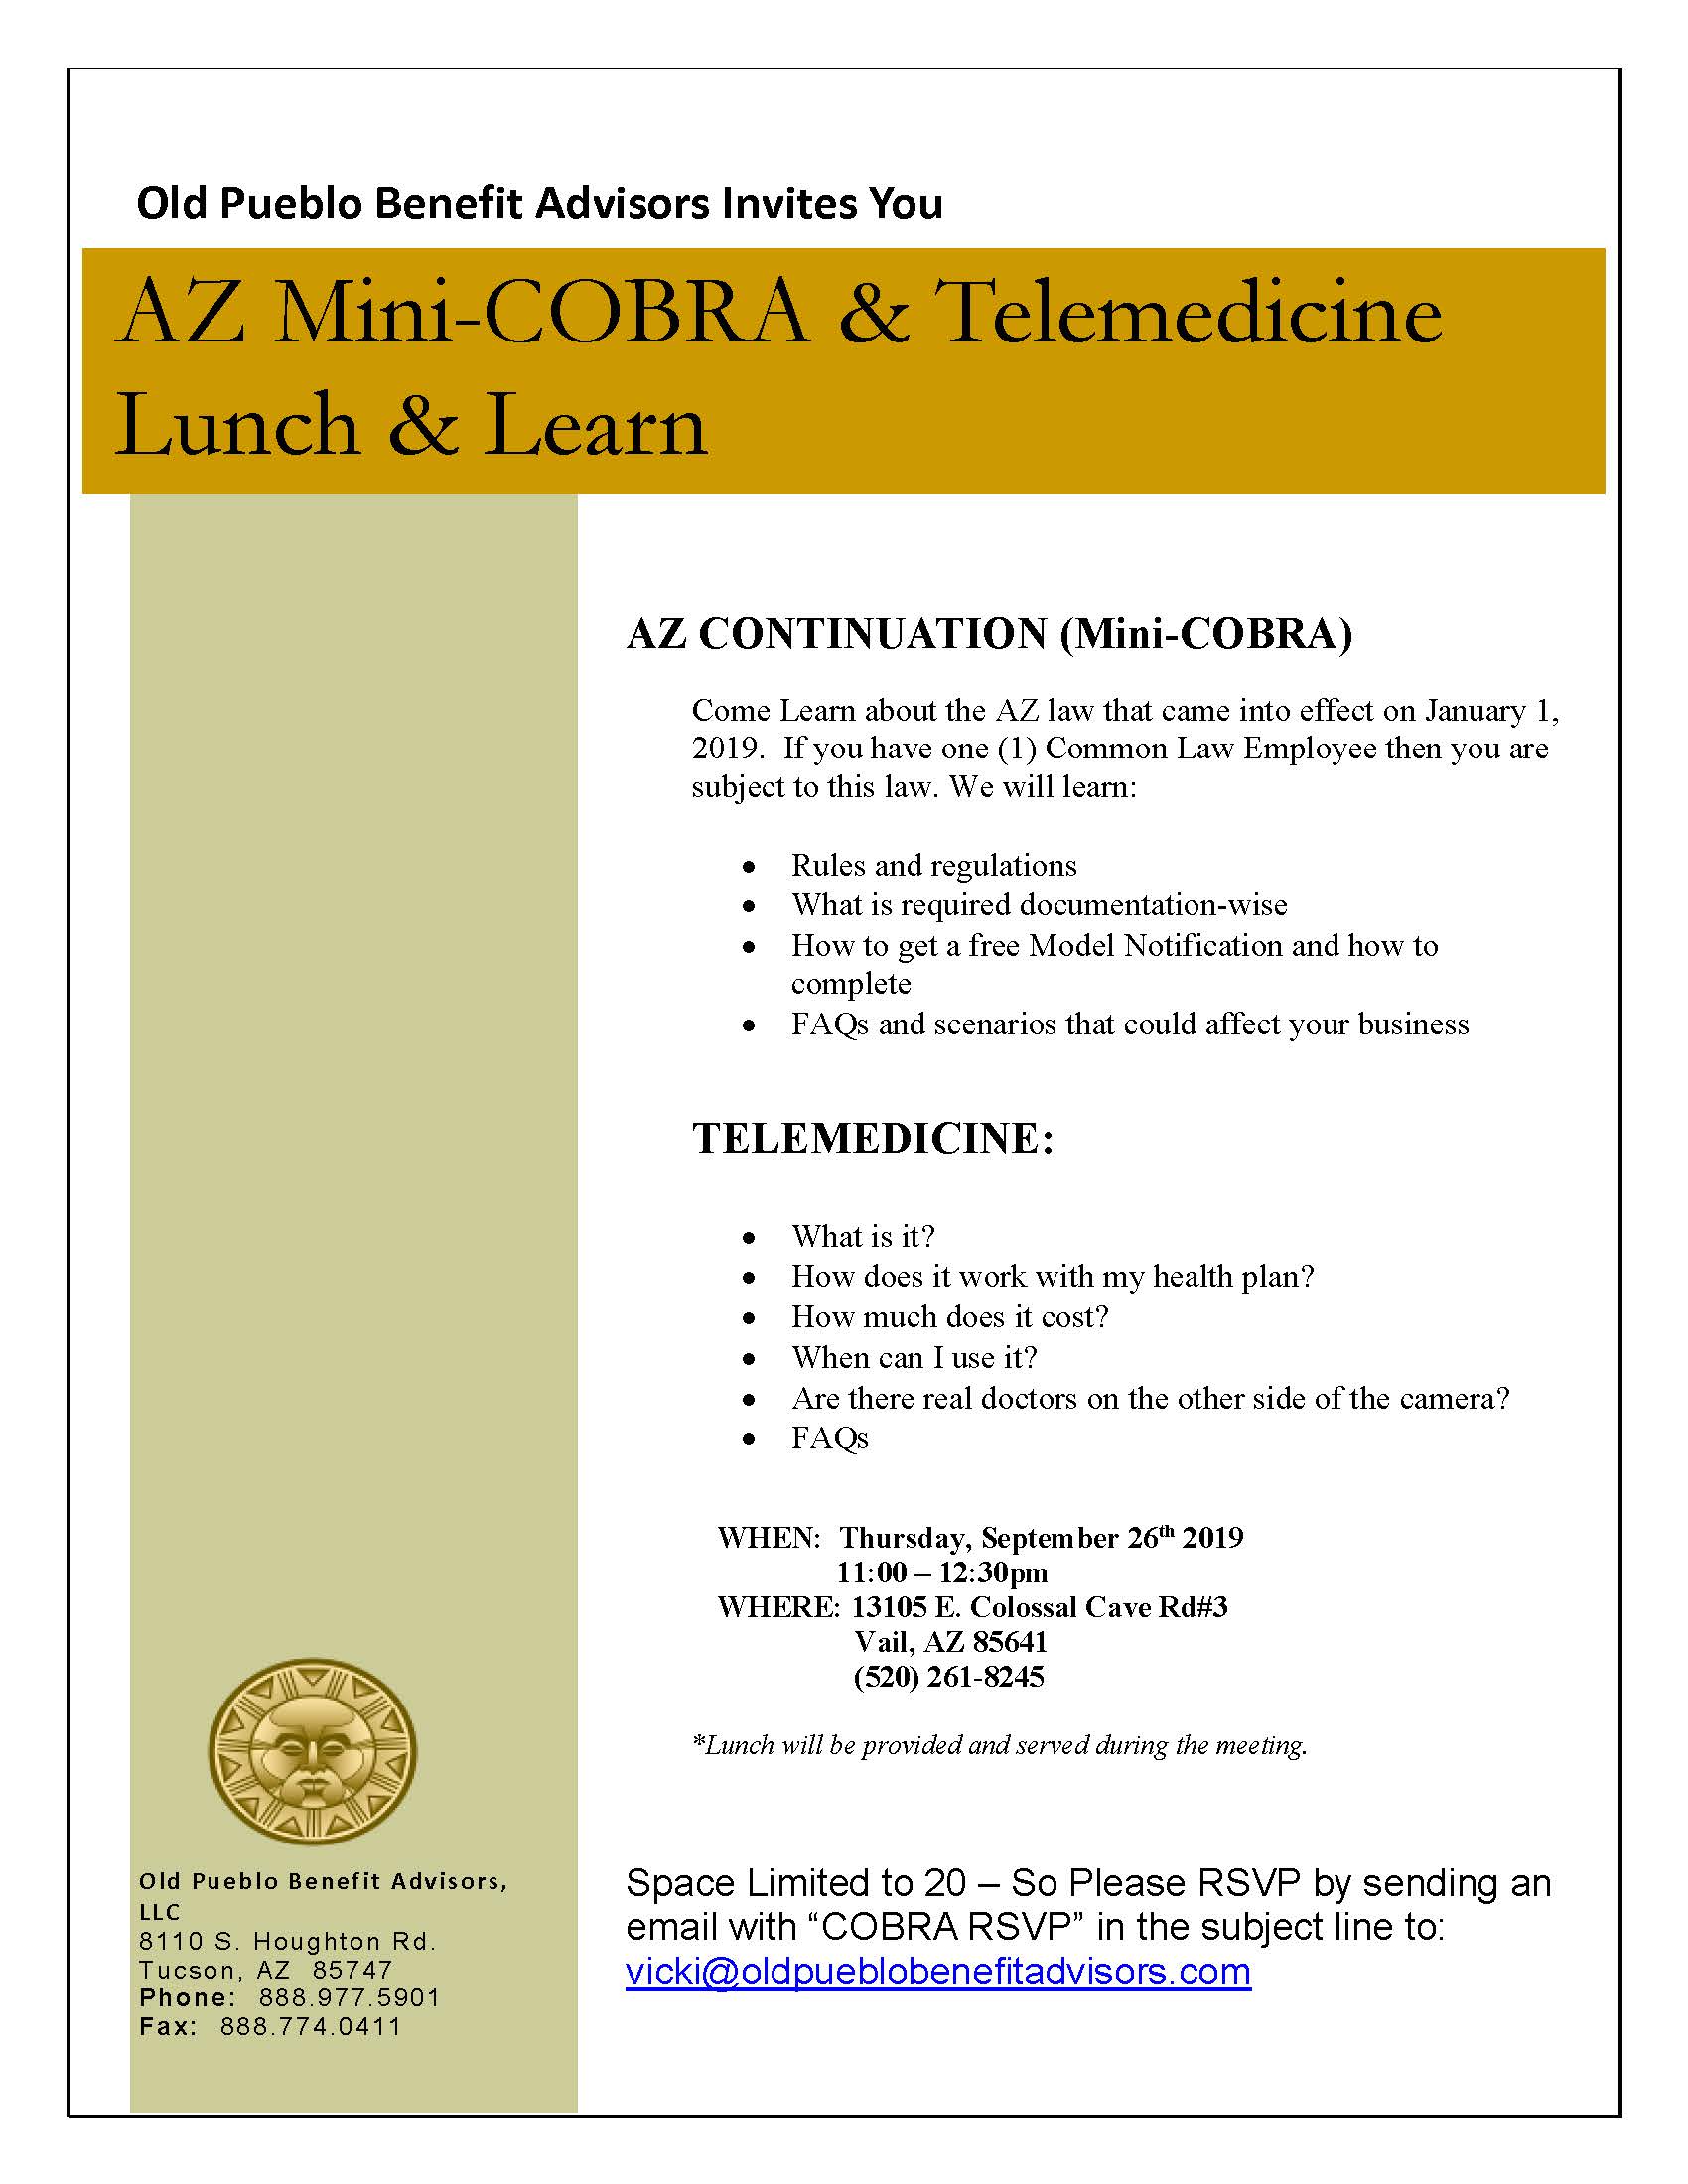 AZ Mini-COBRA & Telemedicine Lunch & Learn